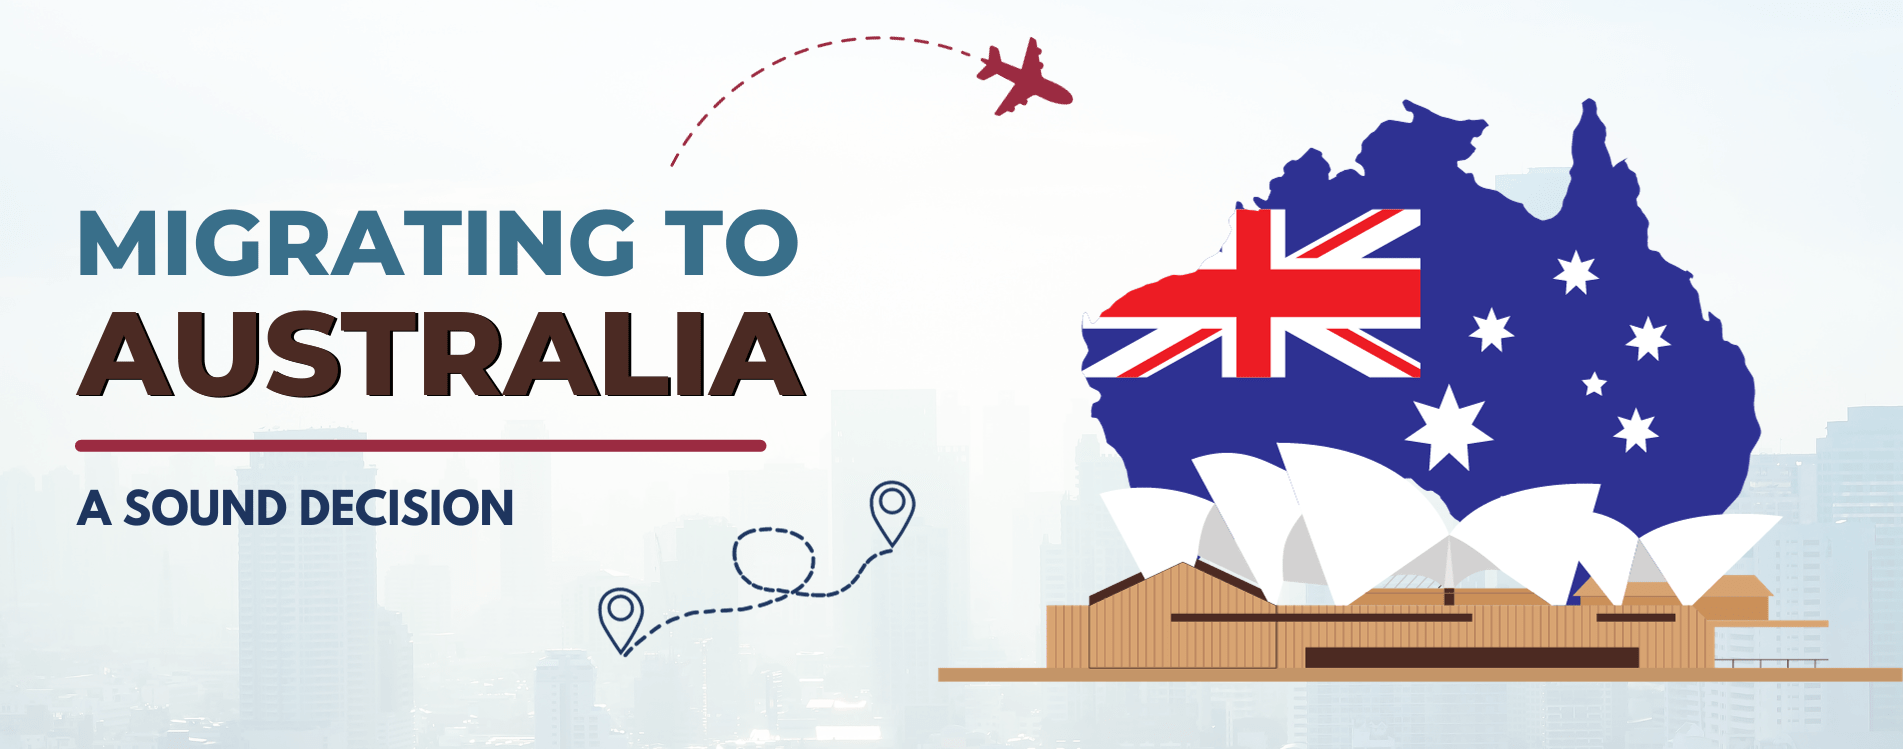 Migrating to Australia: A Sound Decision